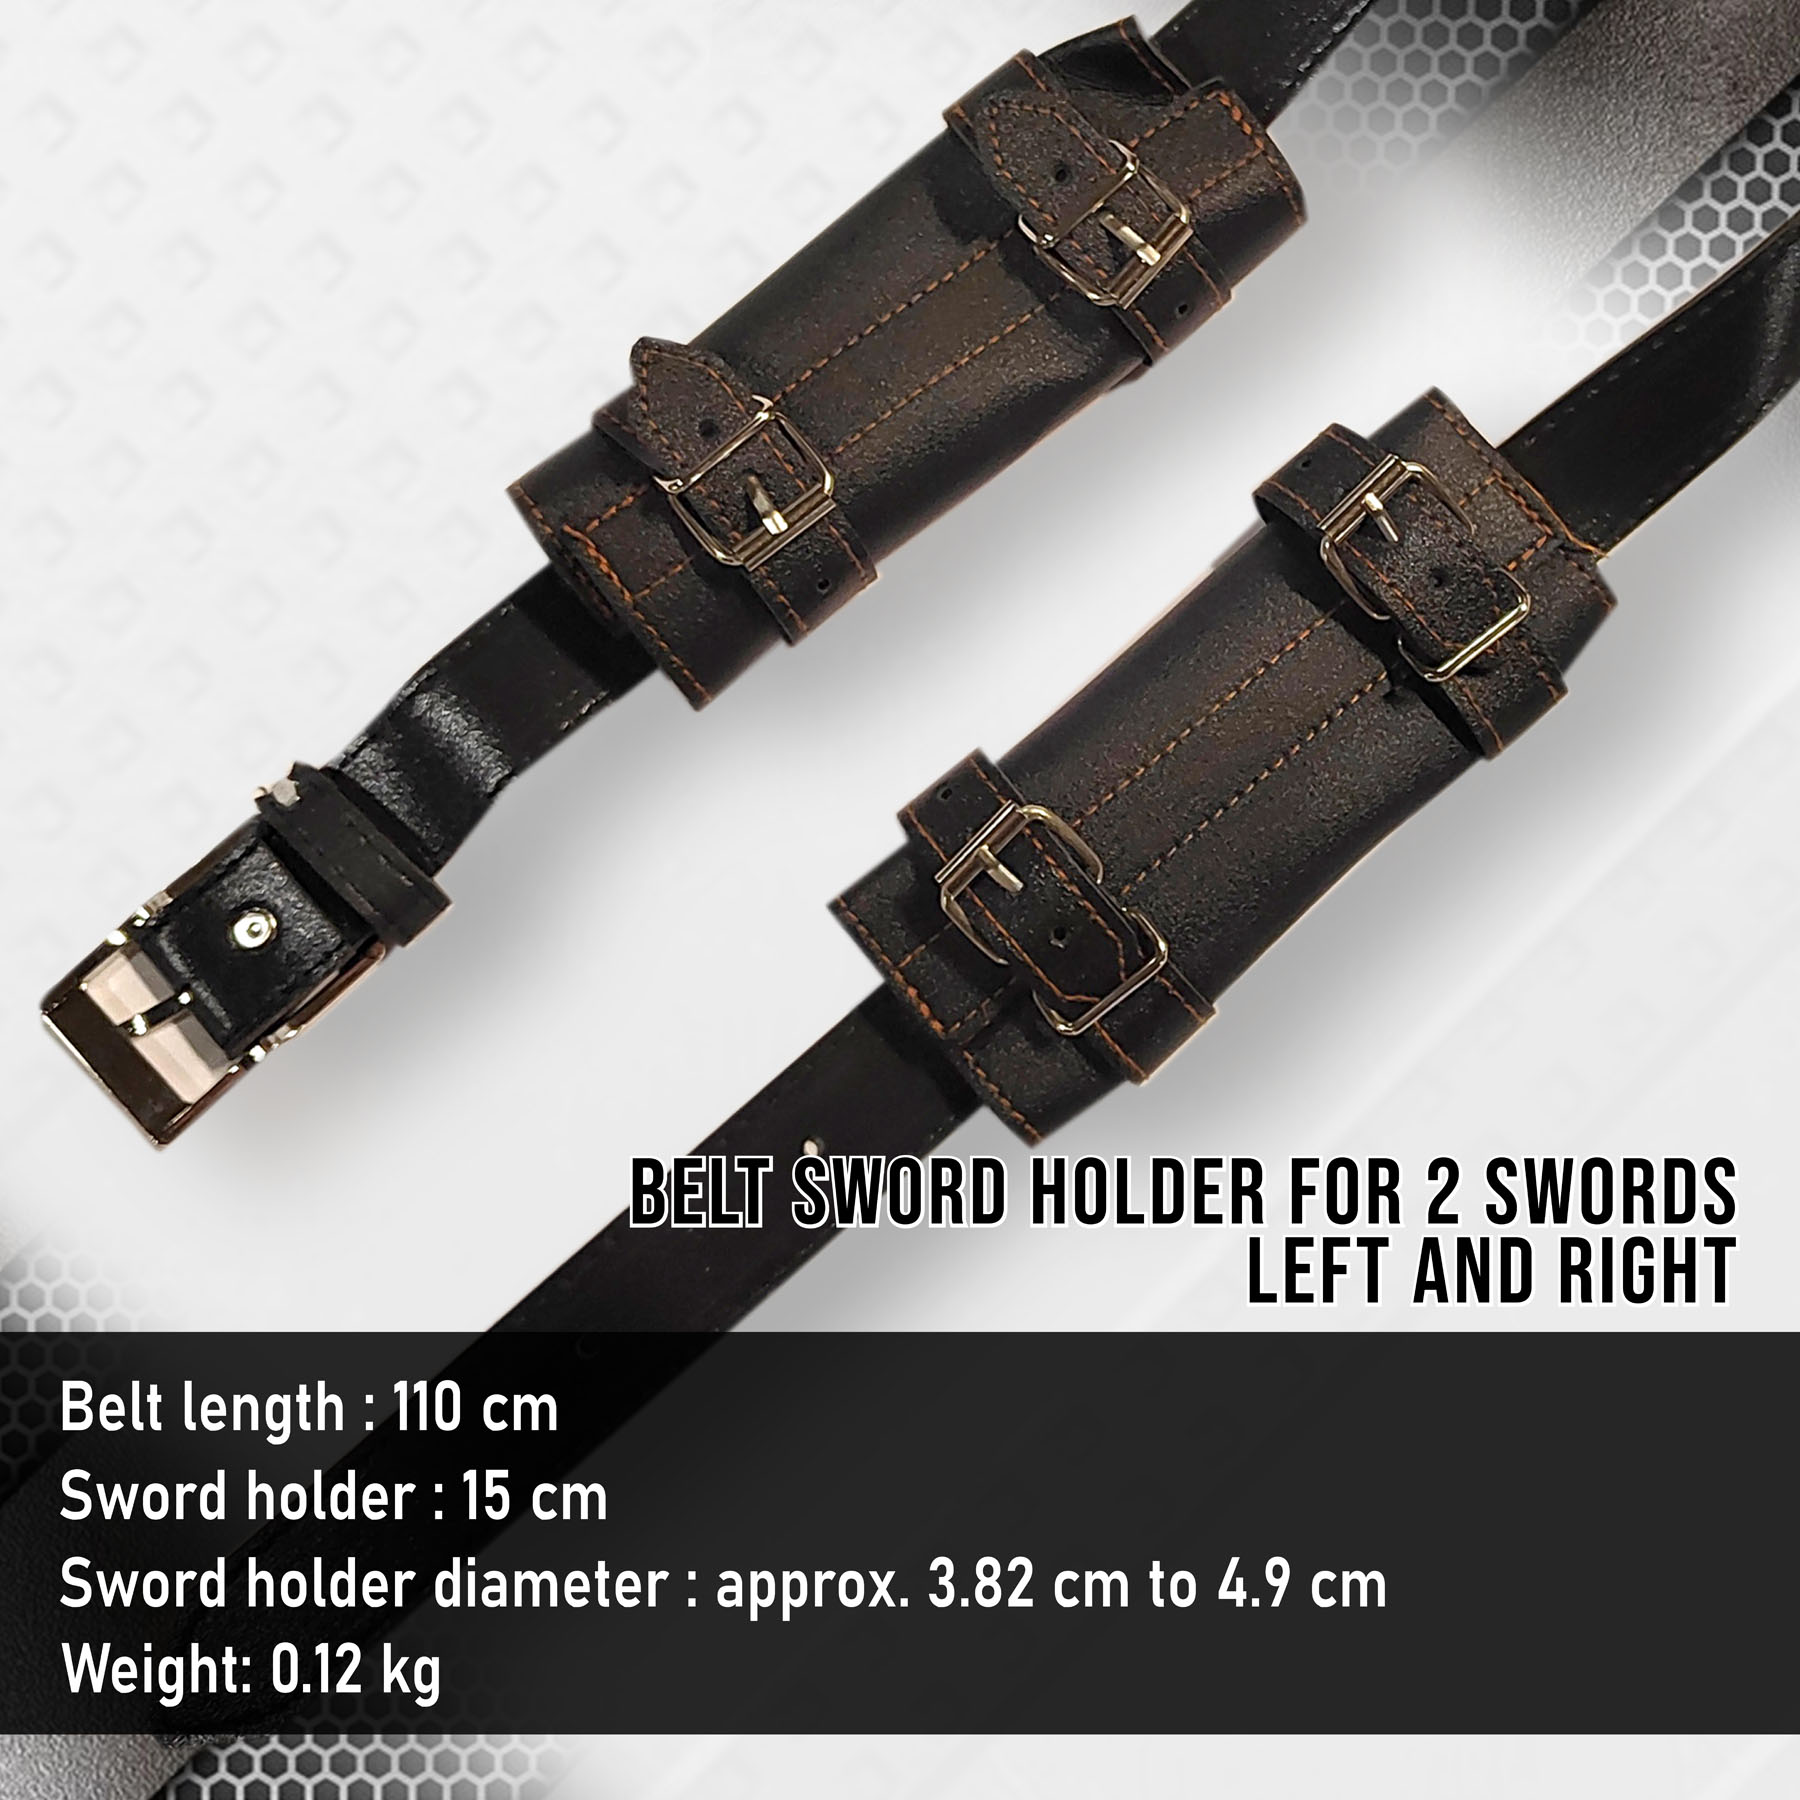 Belt sword holder for 2 swords left and right, black